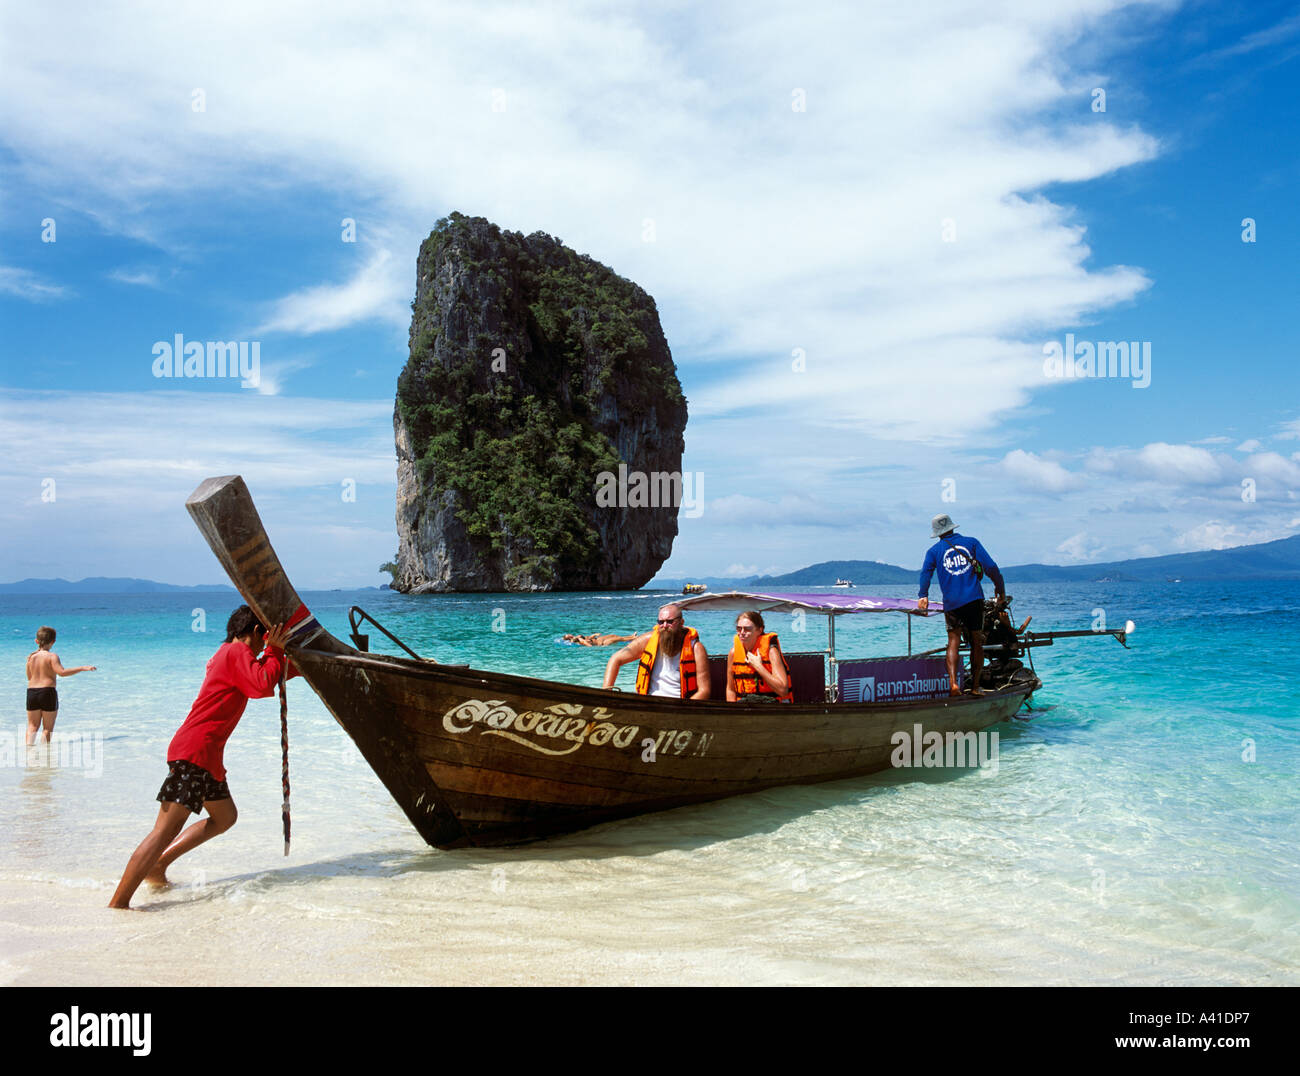 Longtailed taxi boat Phuket Thailandia del sud-est asiatico Foto Stock